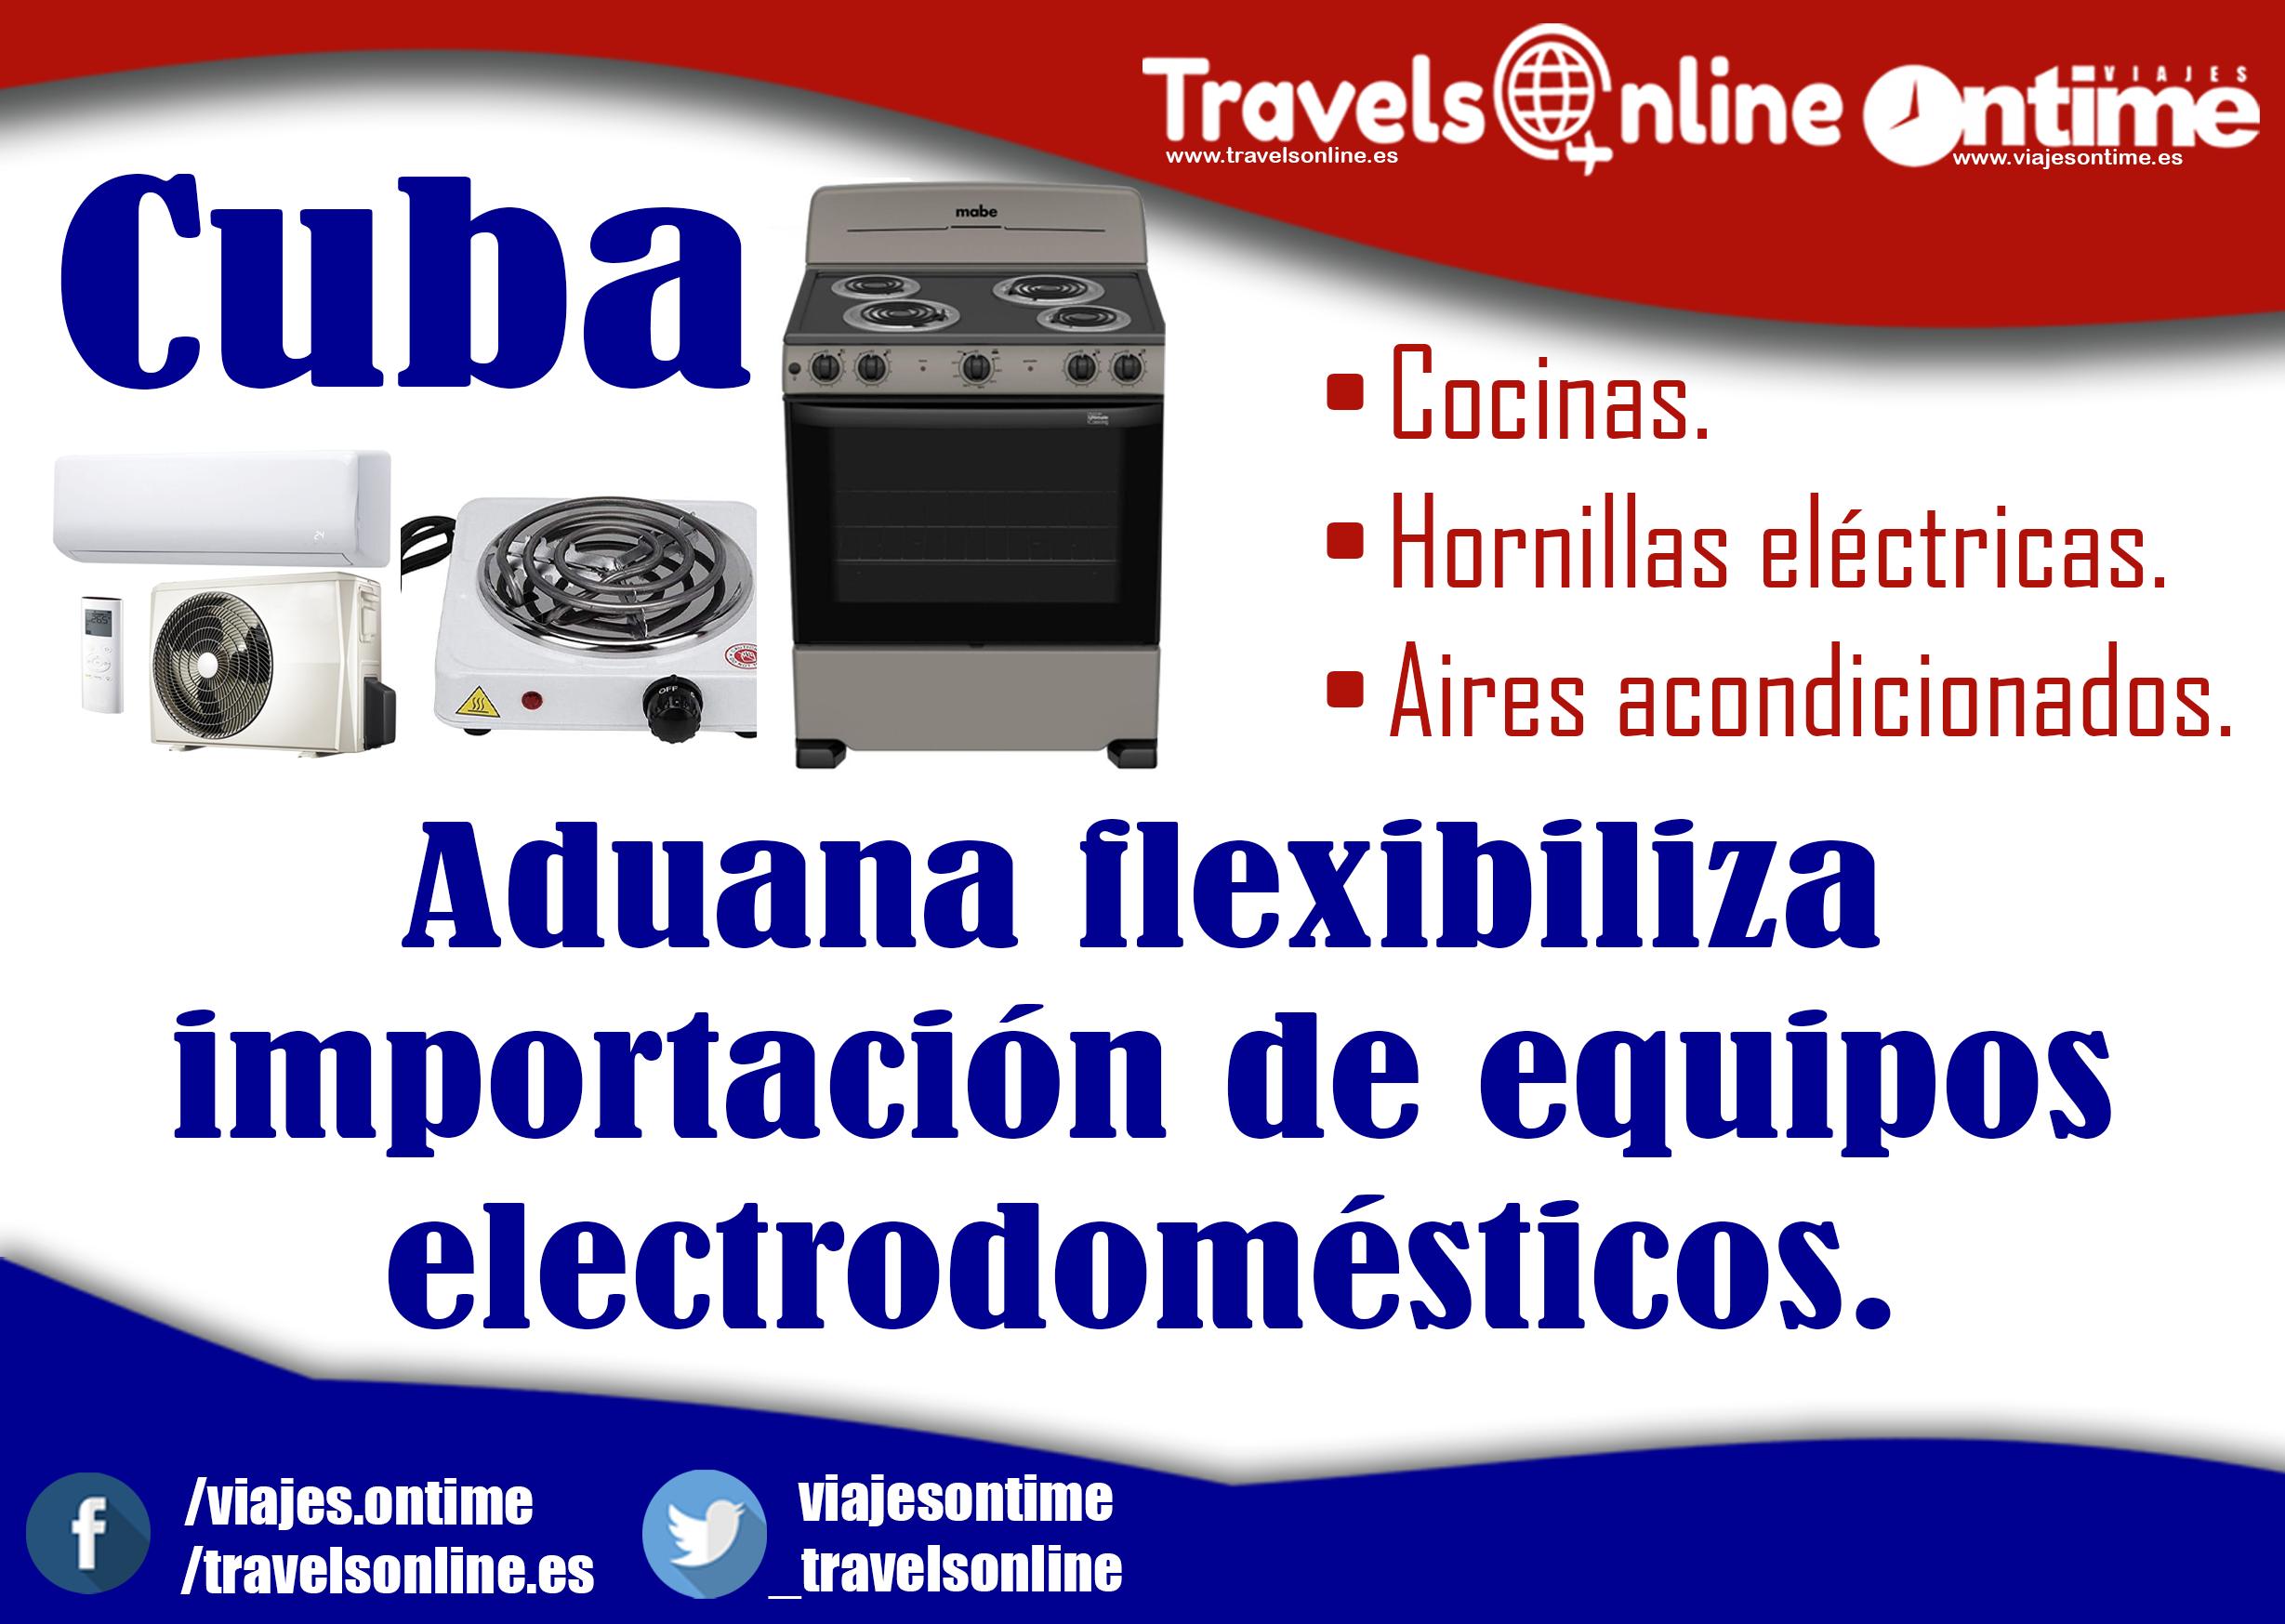 Aduana de Cuba flexibiliza importación de equipos electrodomésticos